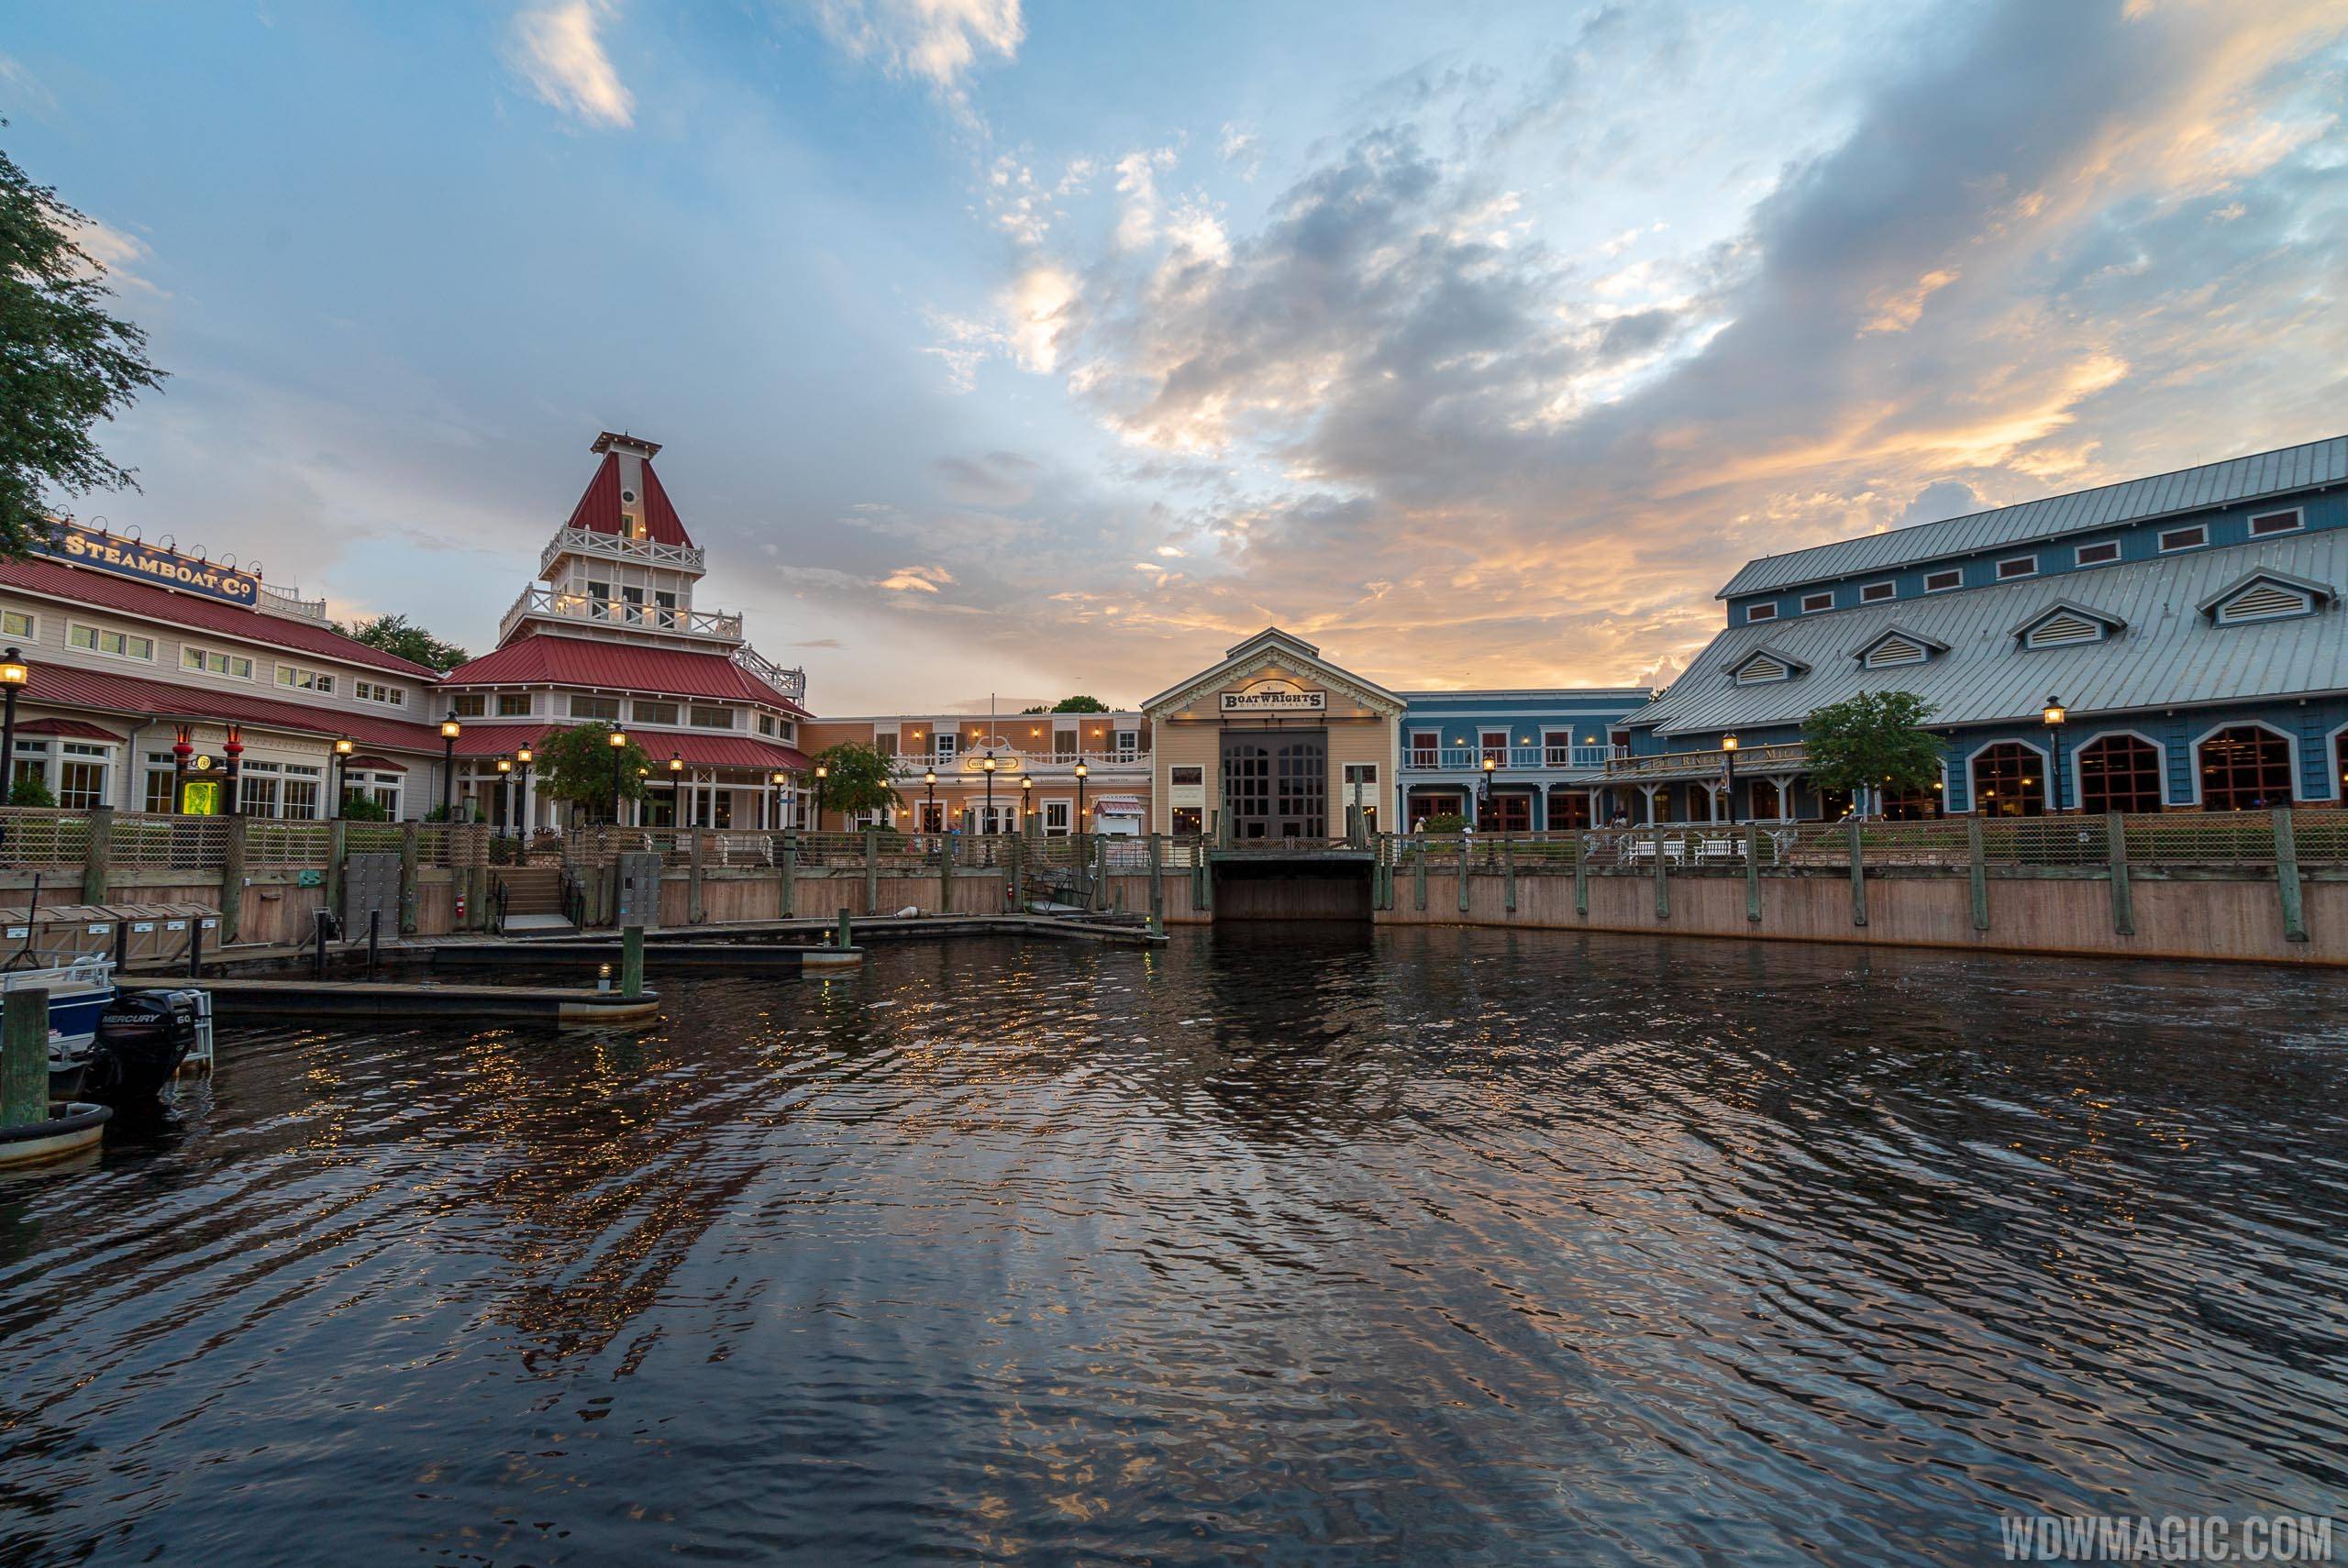 Disney's Port Orleans Resort Riverside reopened October 14 2021